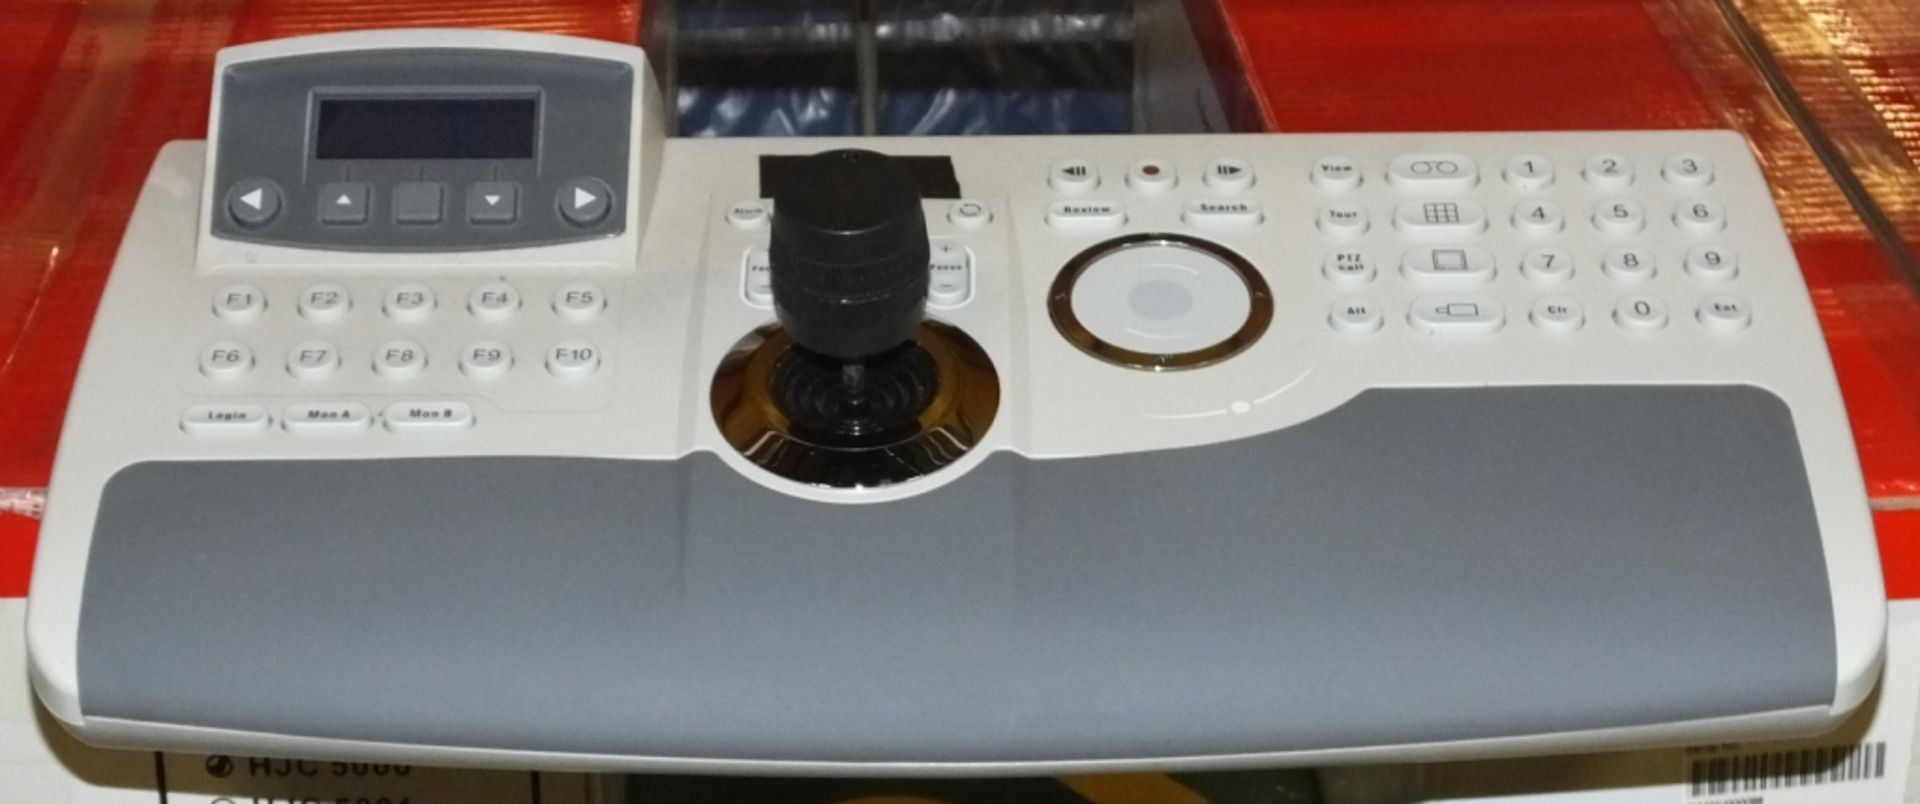 2x Honeywell HJC-5000 CCTV controller keyboards - Image 2 of 3